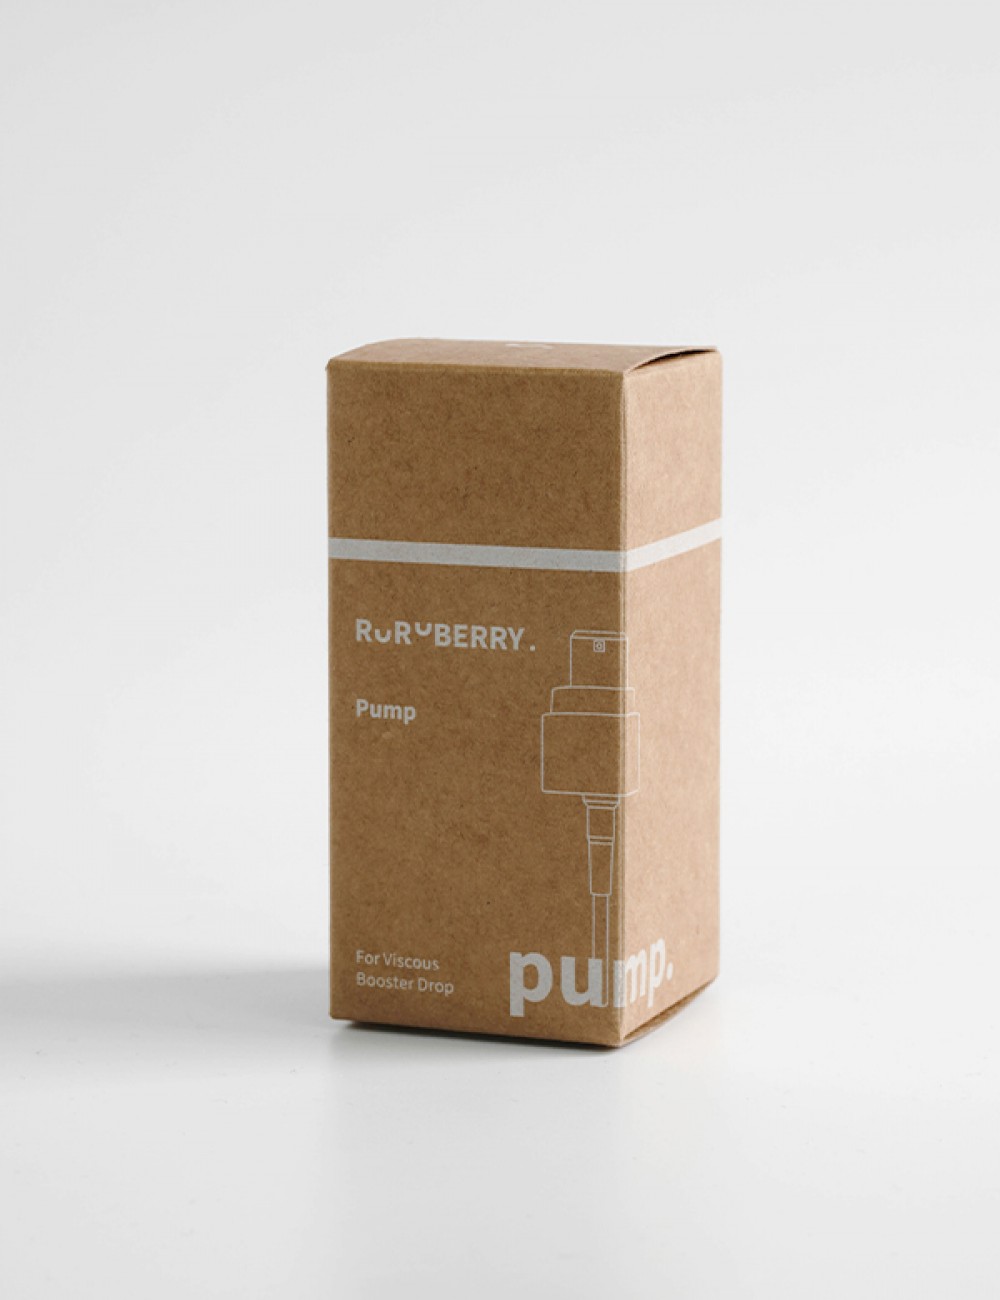 Ruruberry Pump